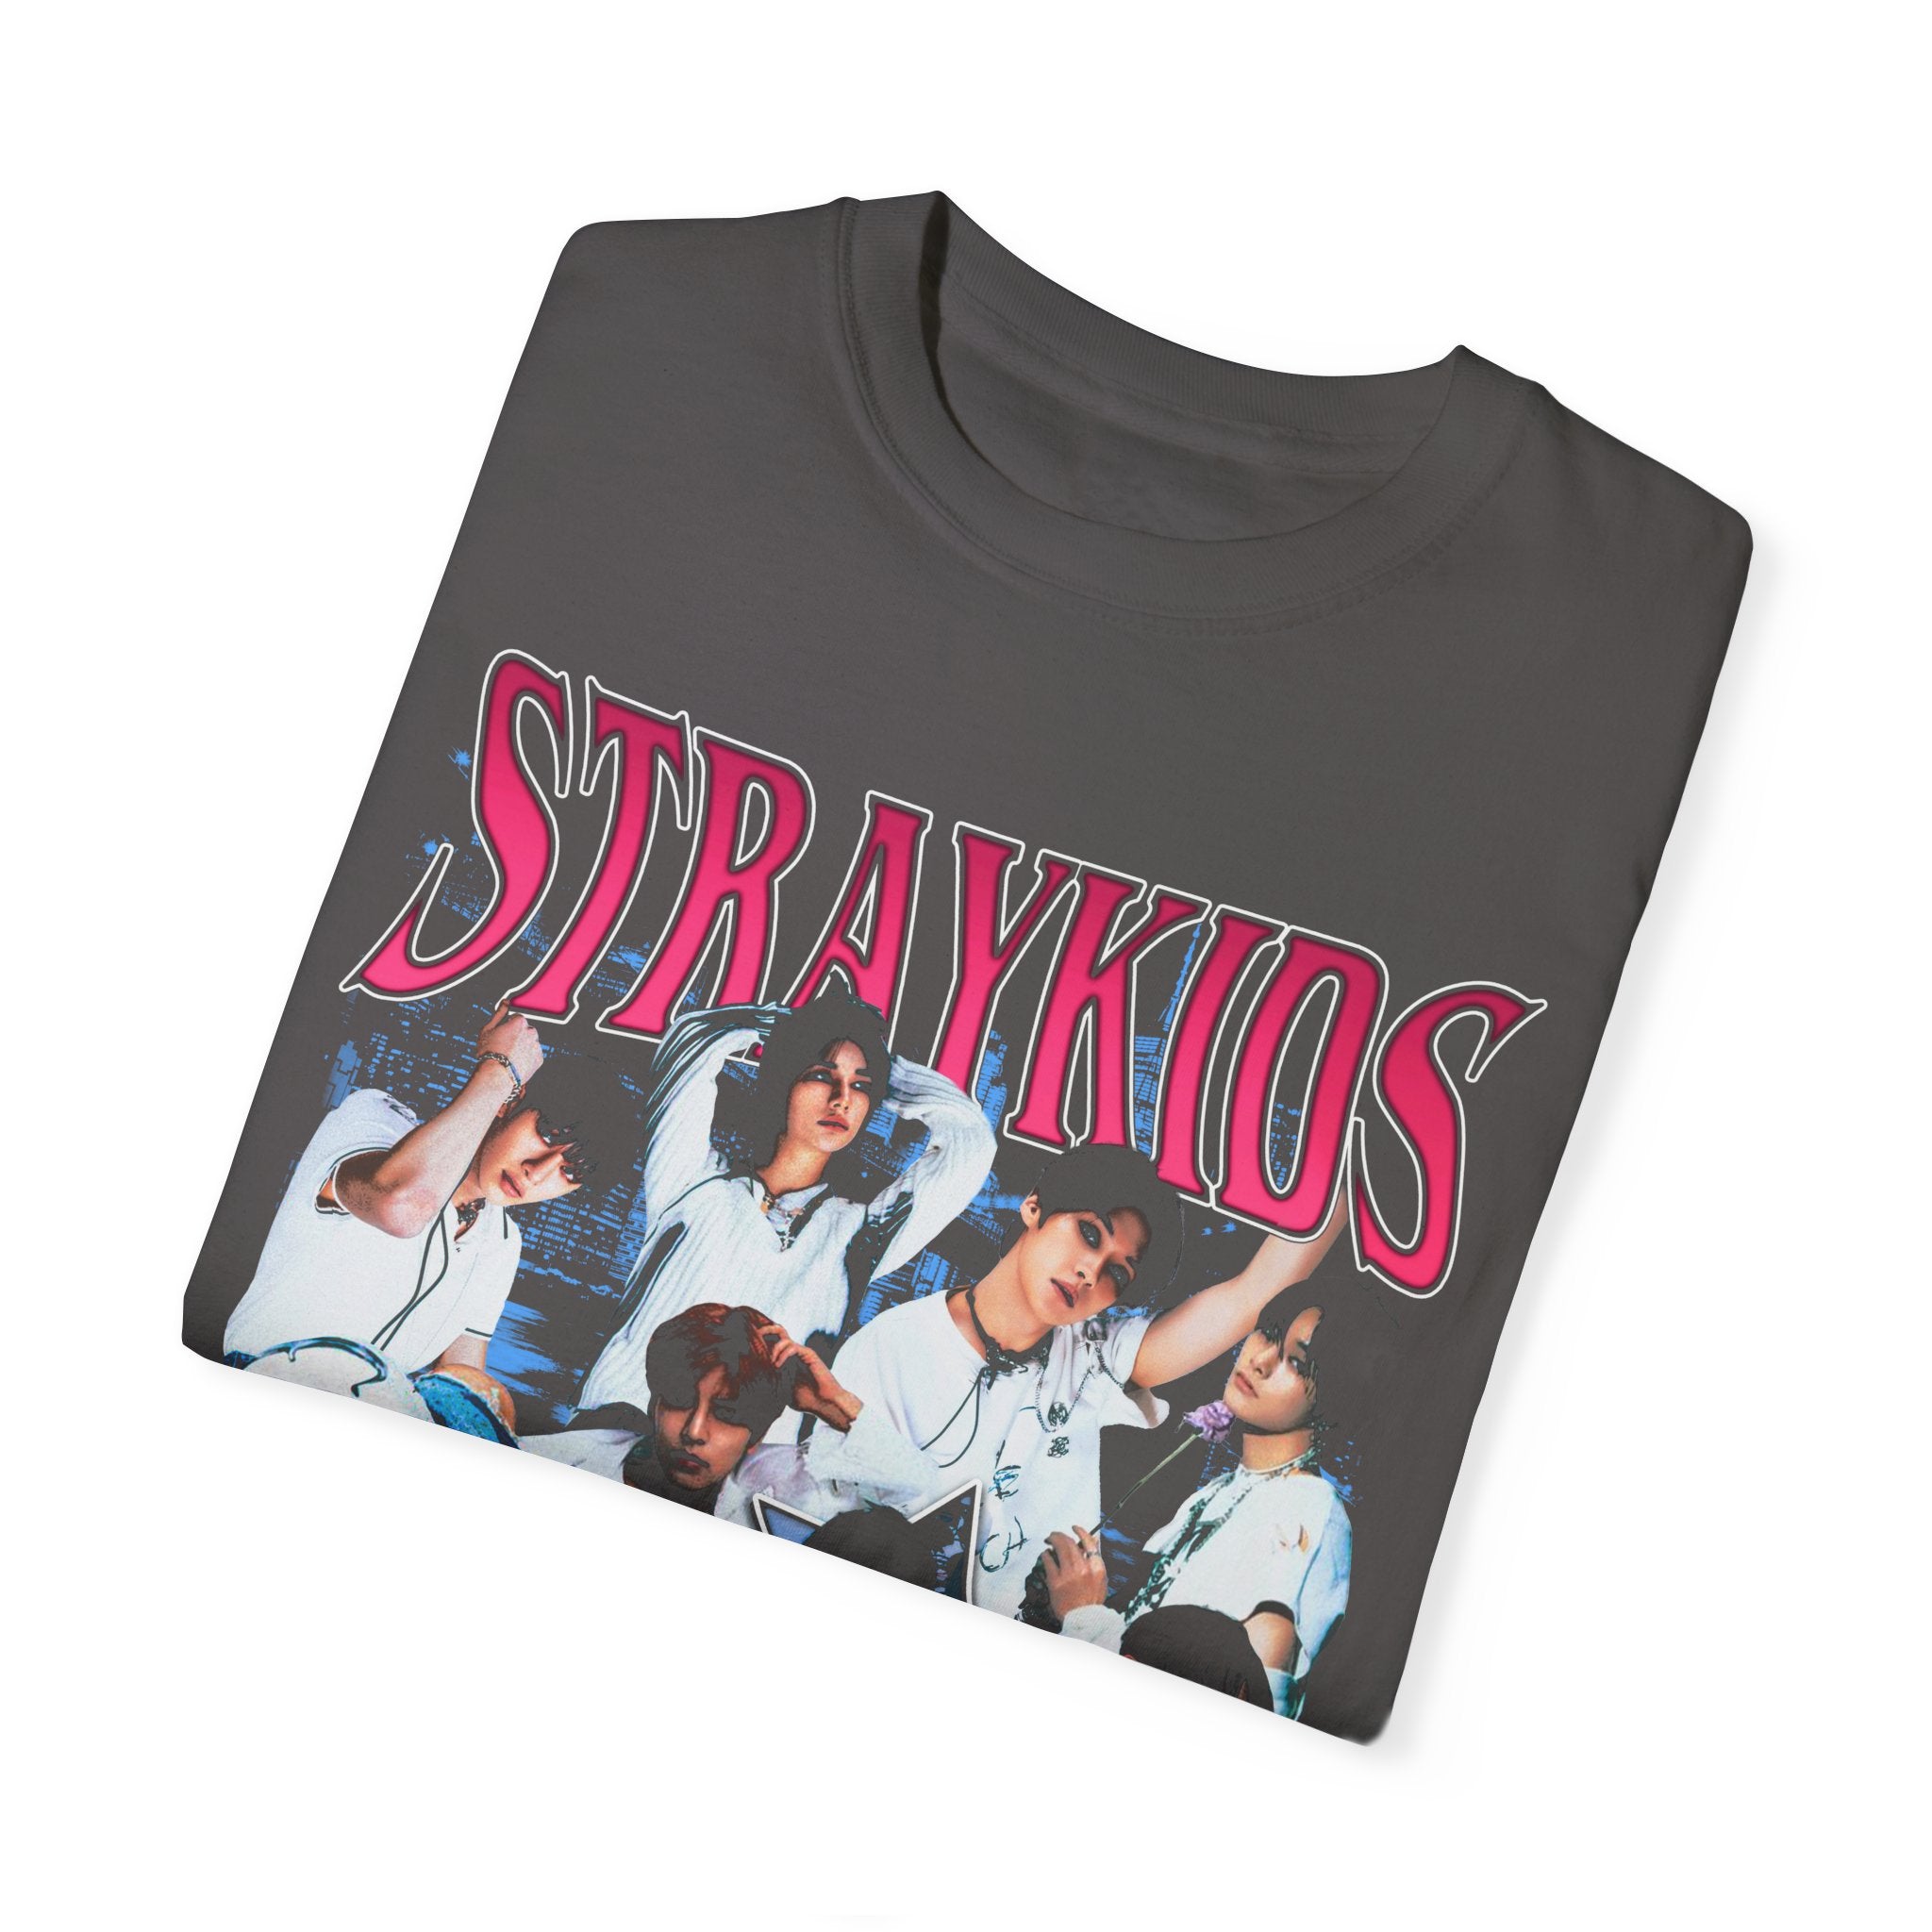 Straykids Rockstar Unisex Garment-Dyed T-shirt